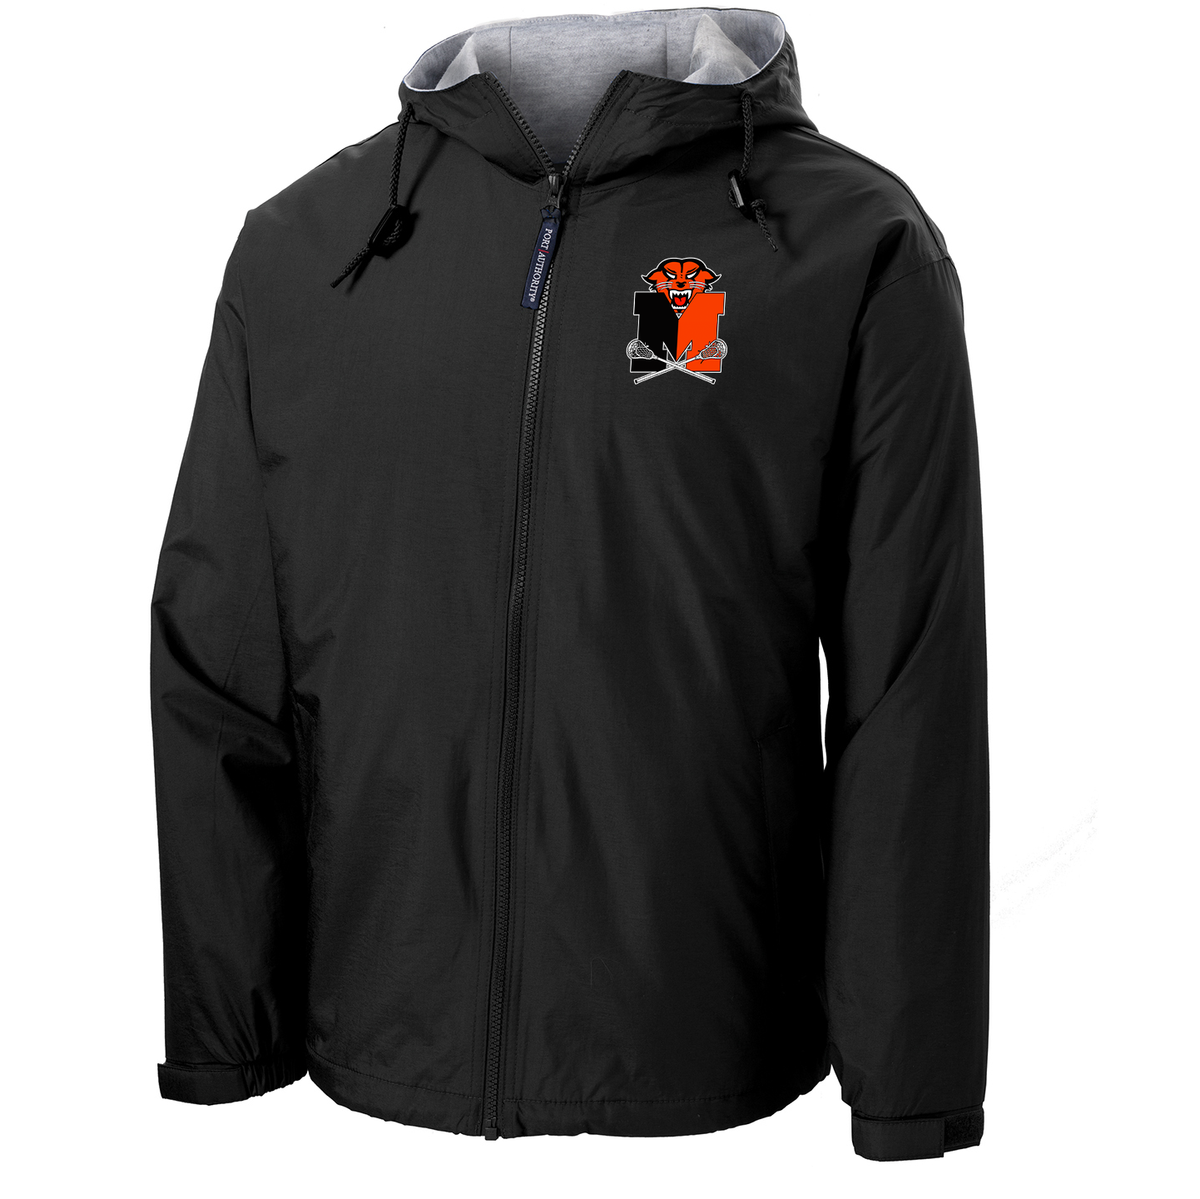 Monroe Lacrosse Black Hooded Jacket